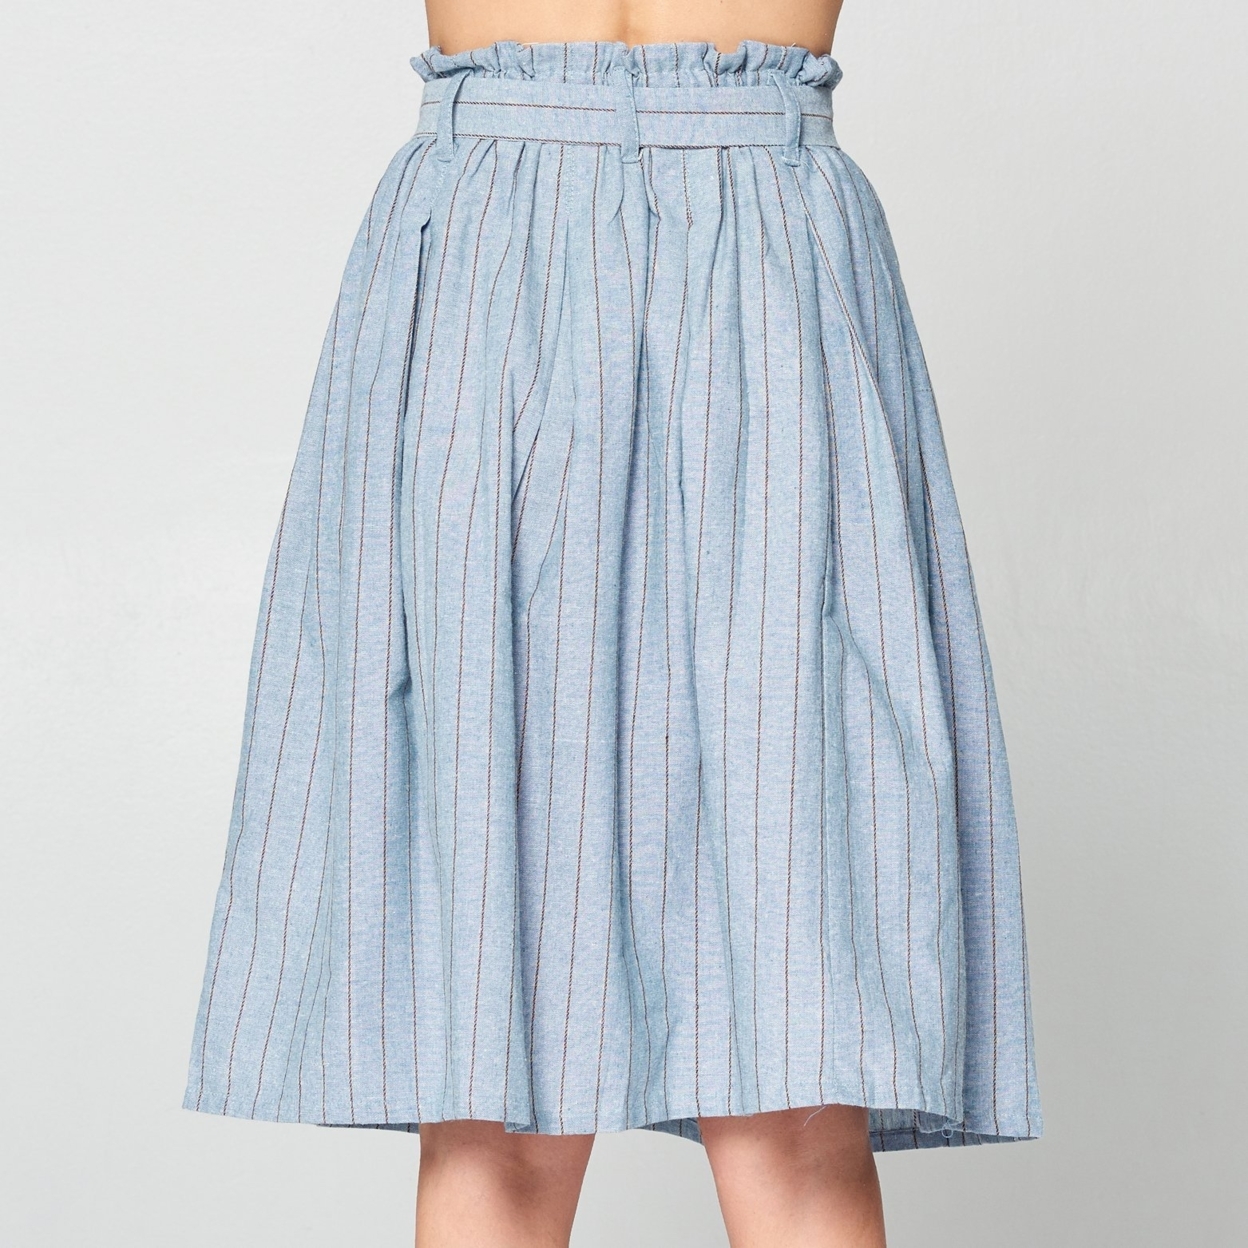 Denim Striped Cotton Skirt - Light Denim, Medium (8-10)